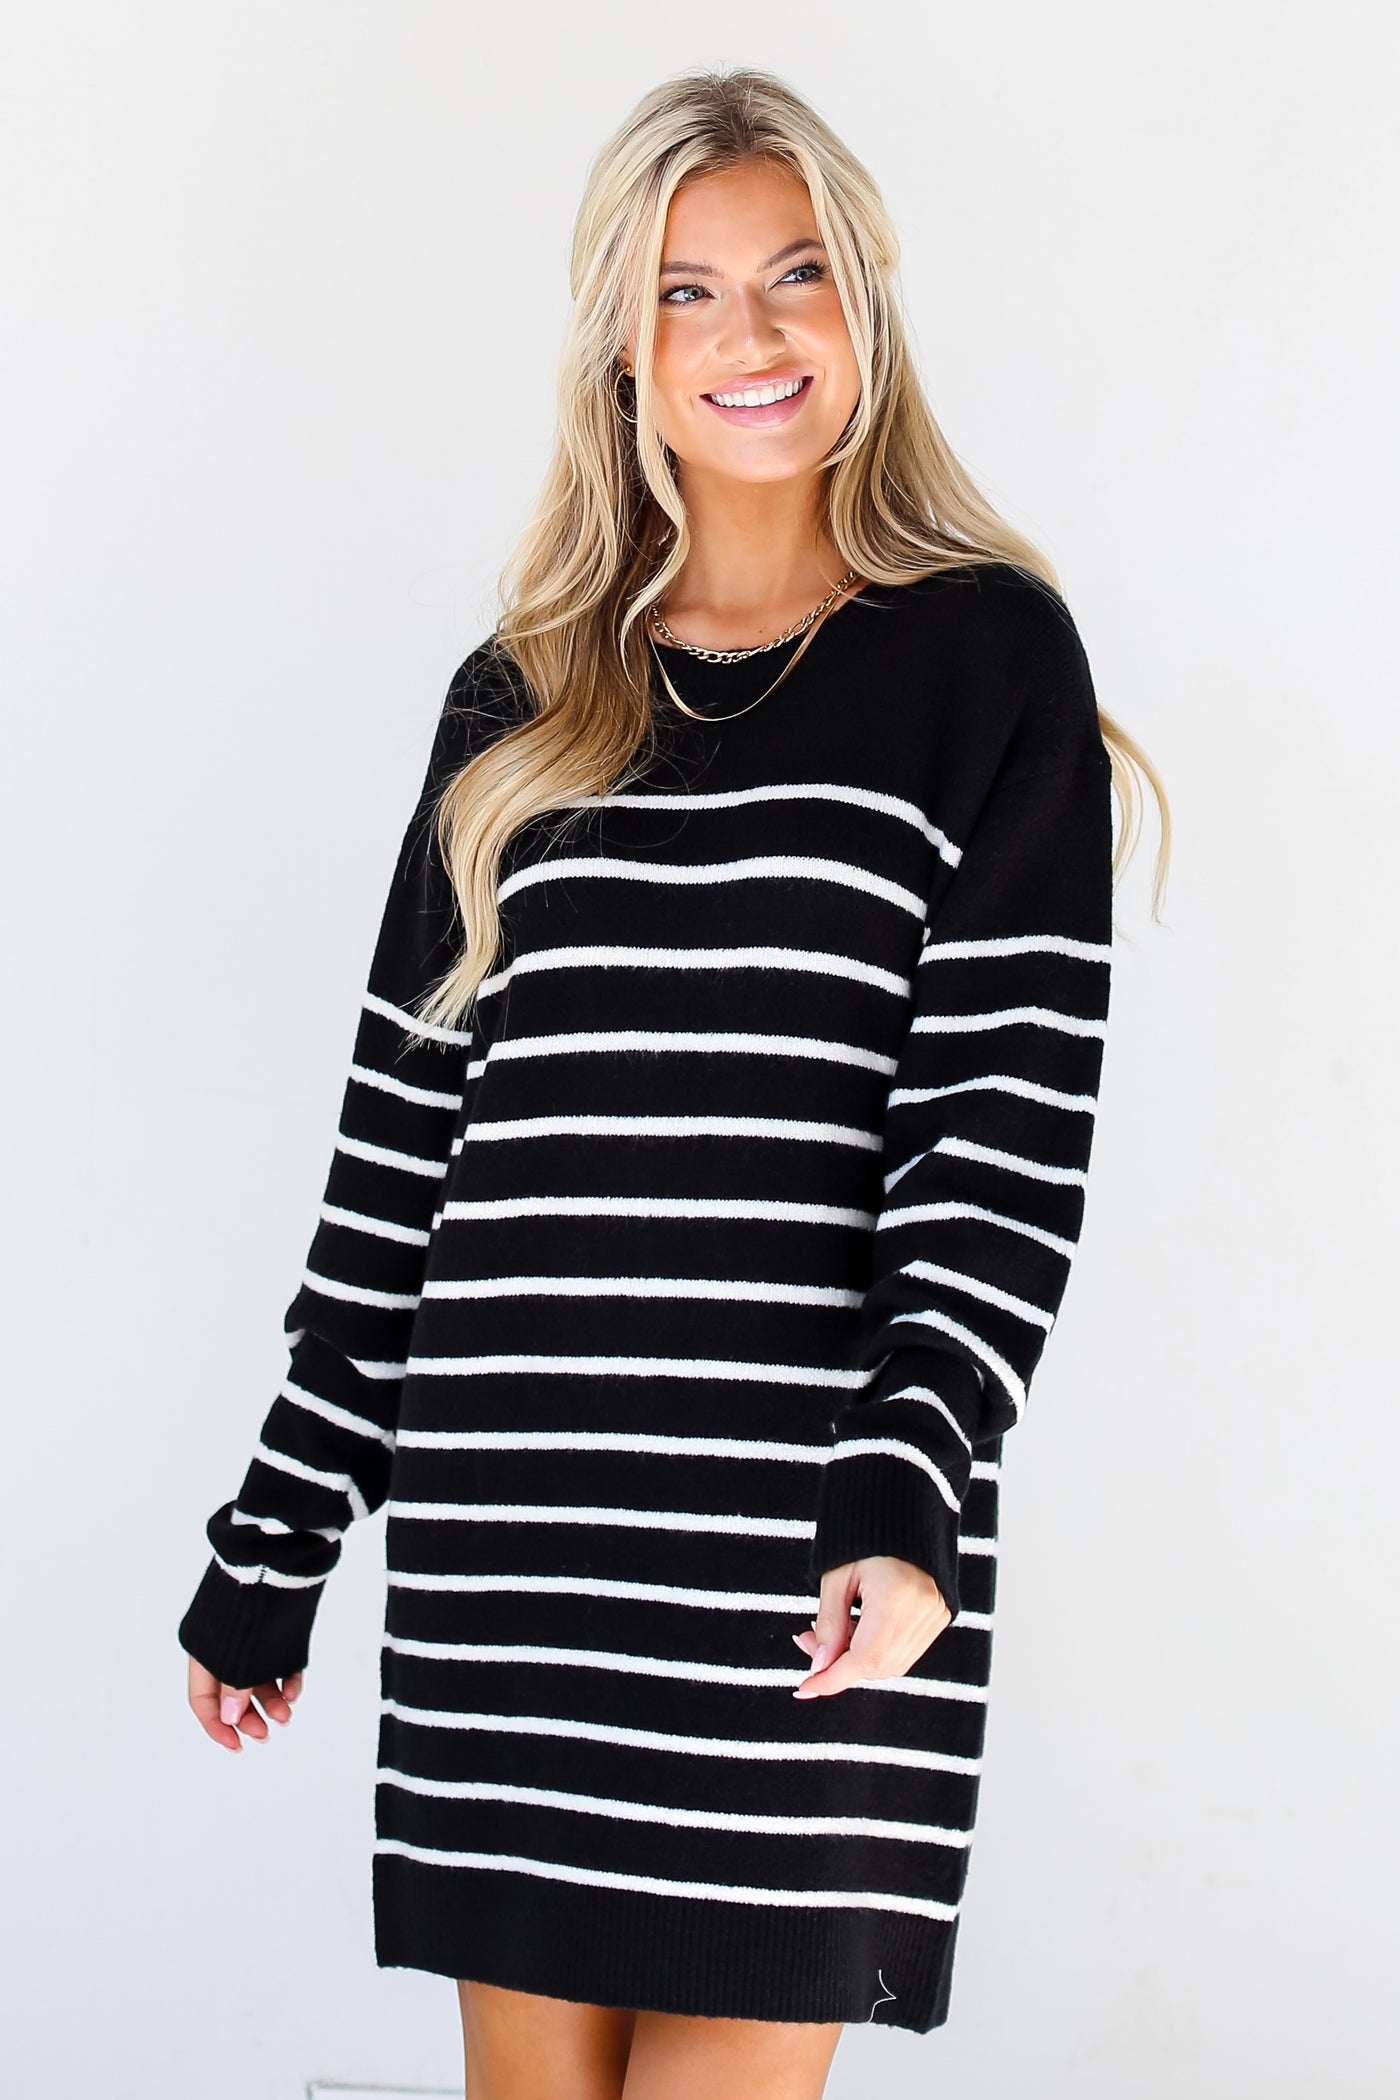 black + white Striped Sweater Mini Dress front view on dress up model